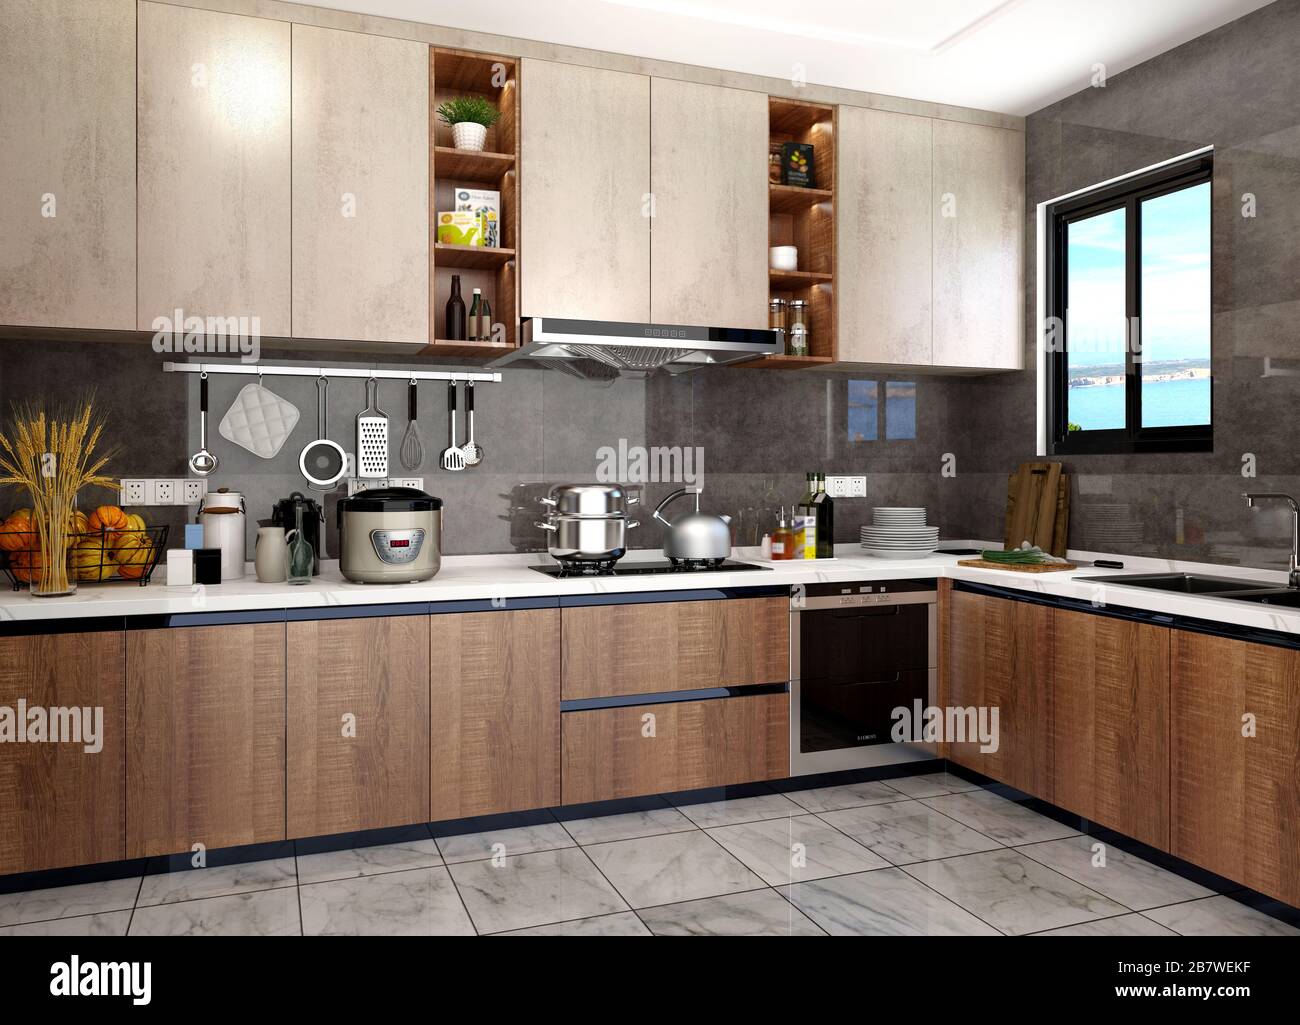 25d render of modern kitchen interior Stock Photo   Alamy